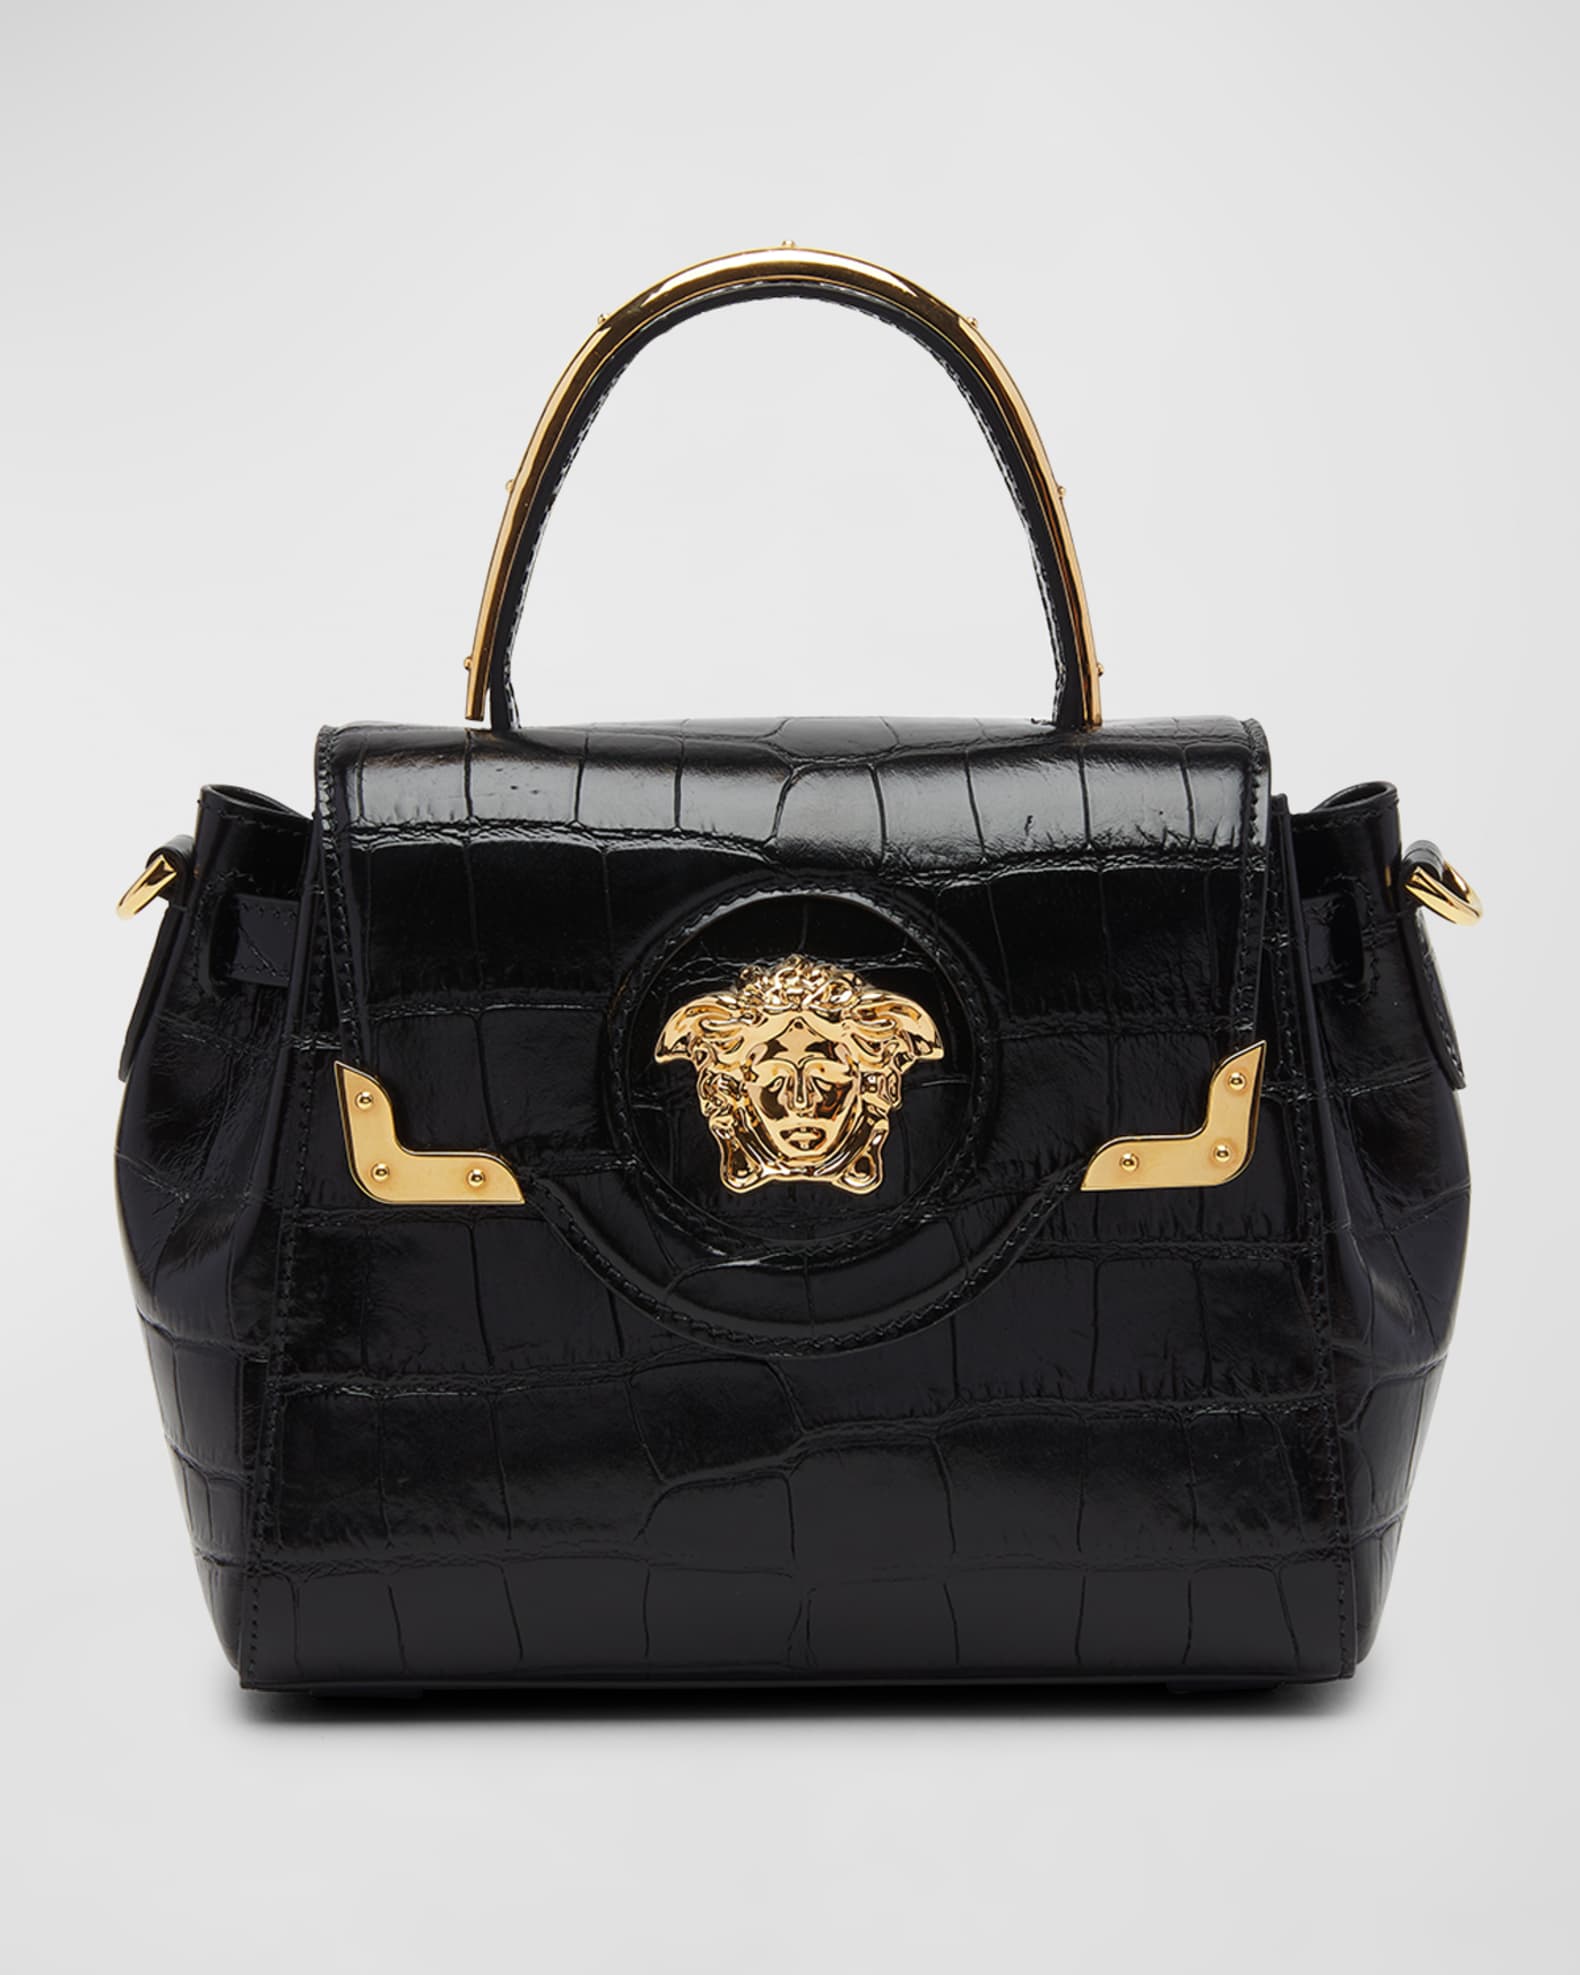 Versace - New w/o Tags - La Medusa Mini Bag - White, Black - Handbag